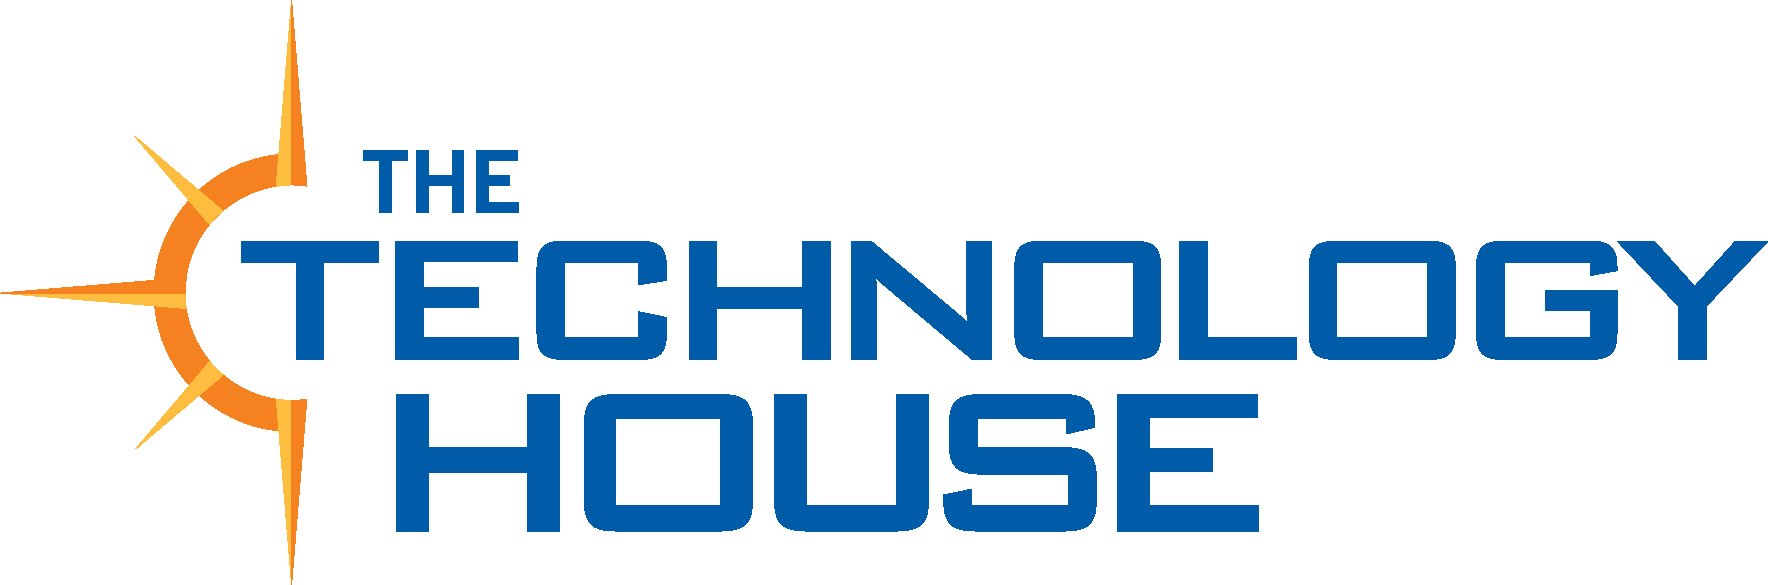 the technology house logo